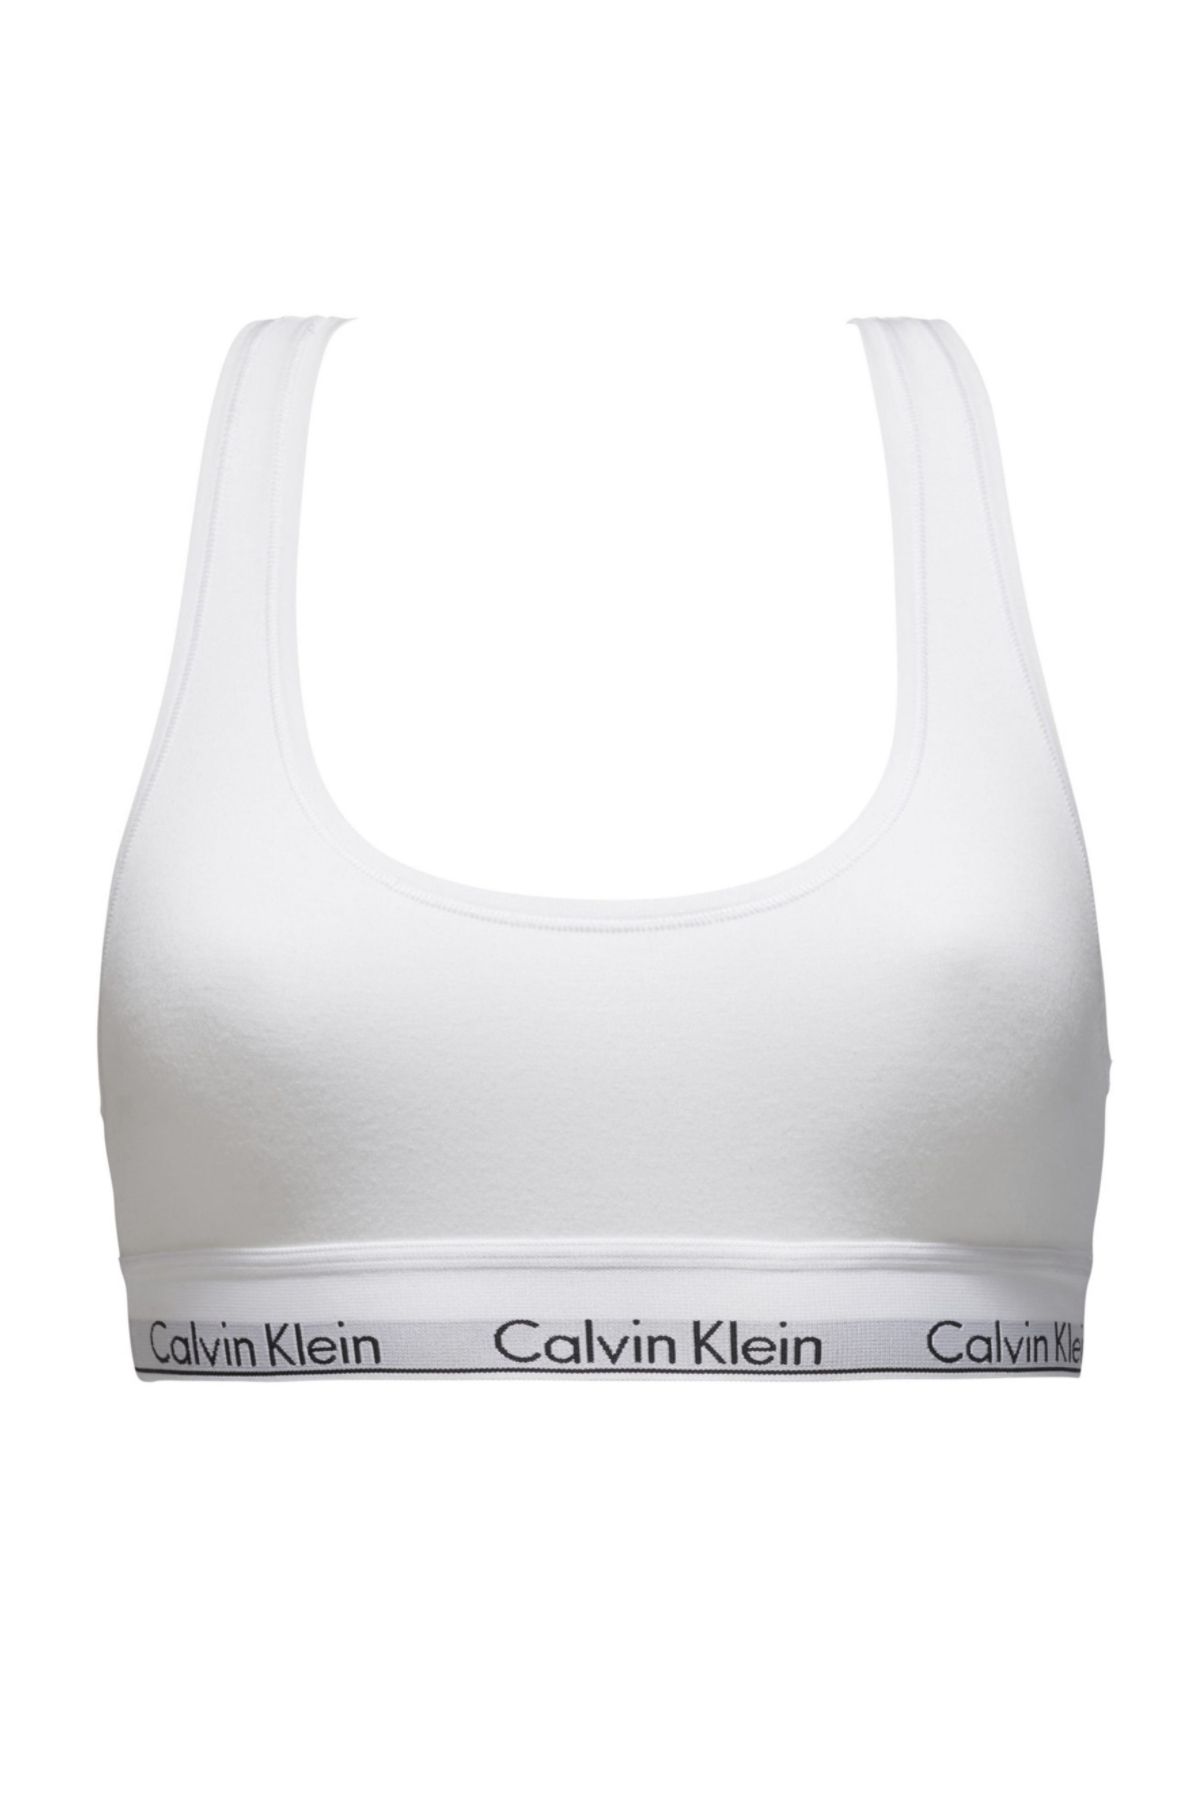 Calvin Klein F3785E-VIJ, sizing. XL - Bra